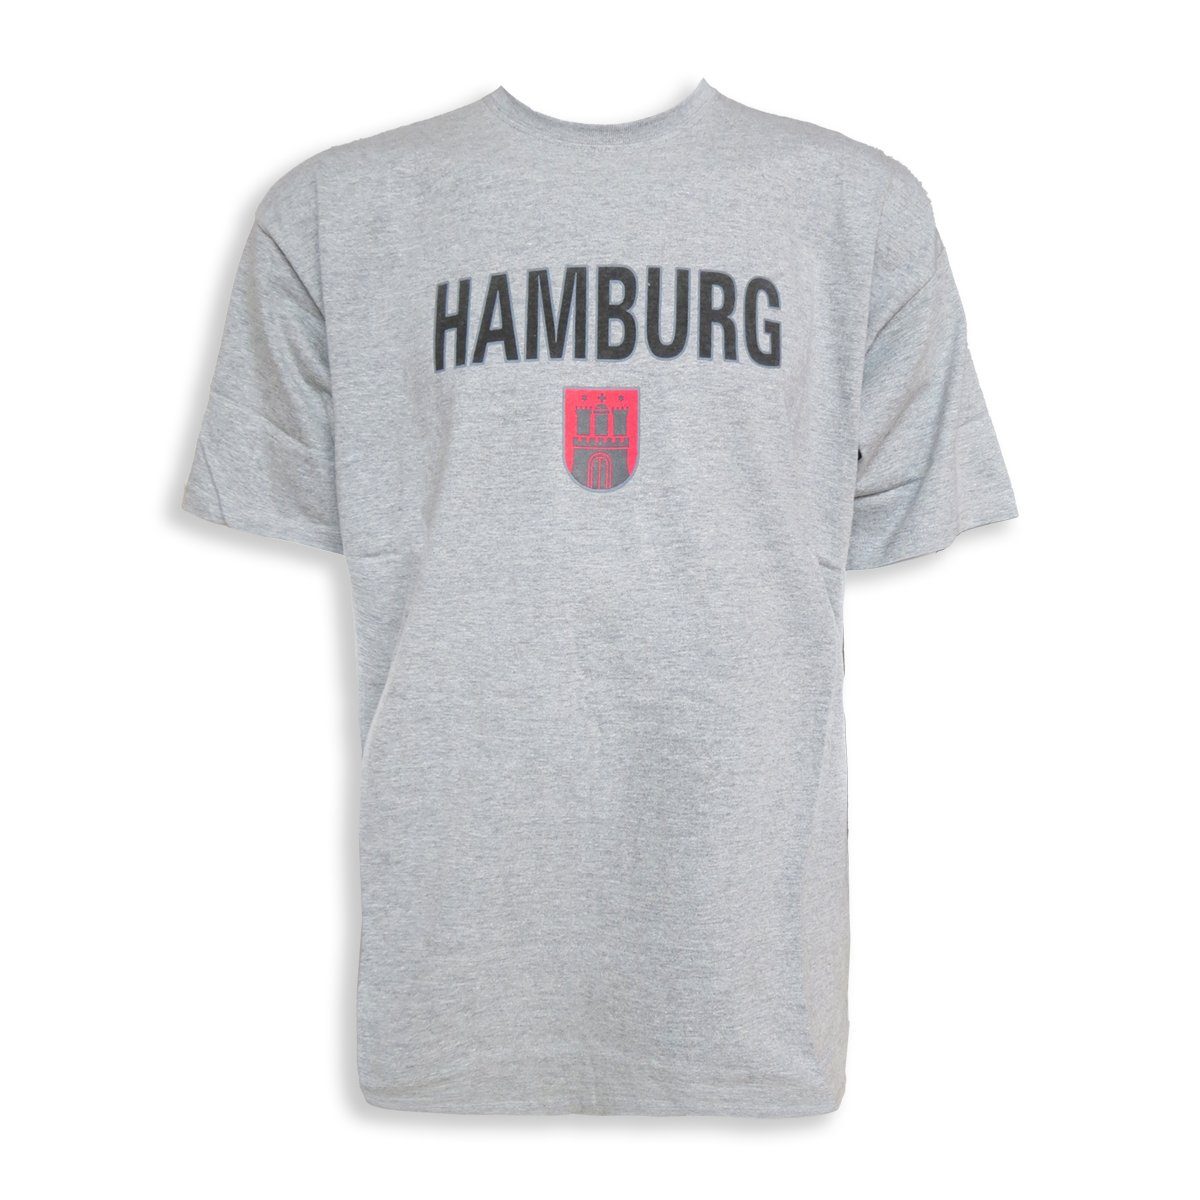 Sonia Originelli T-Shirt Herren "Hamburg grau Classic" Wappen Baumwolle T-Shirt